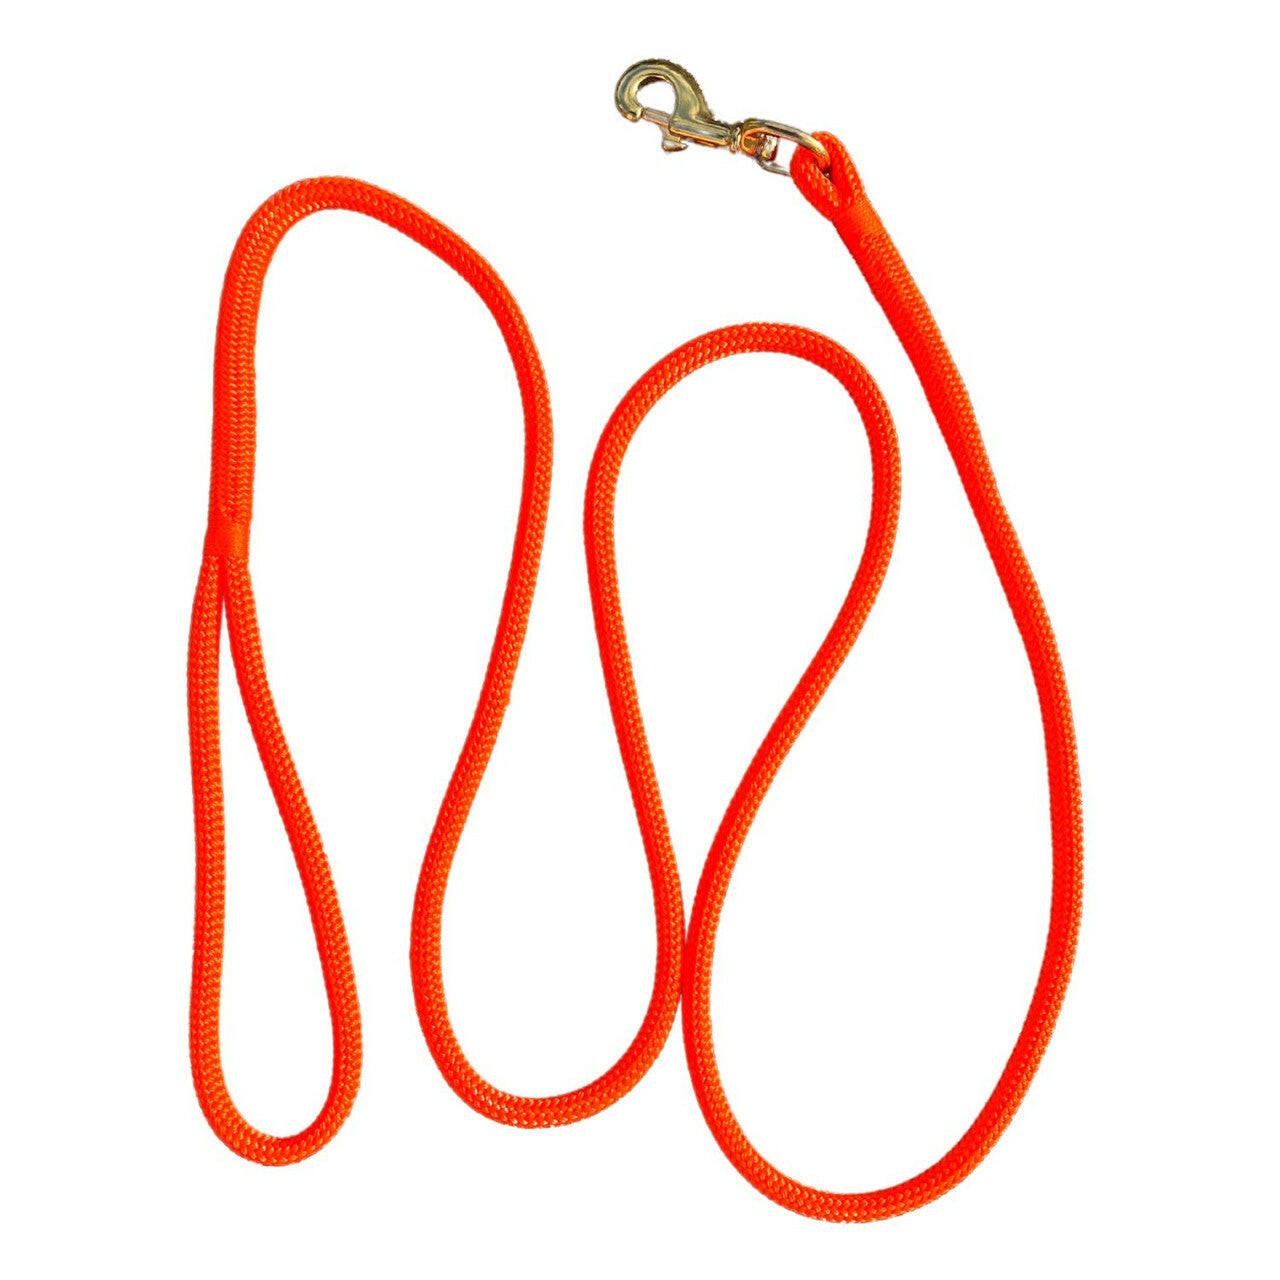 Nautical Rope Dog Leash - Black/Orange/Yellow